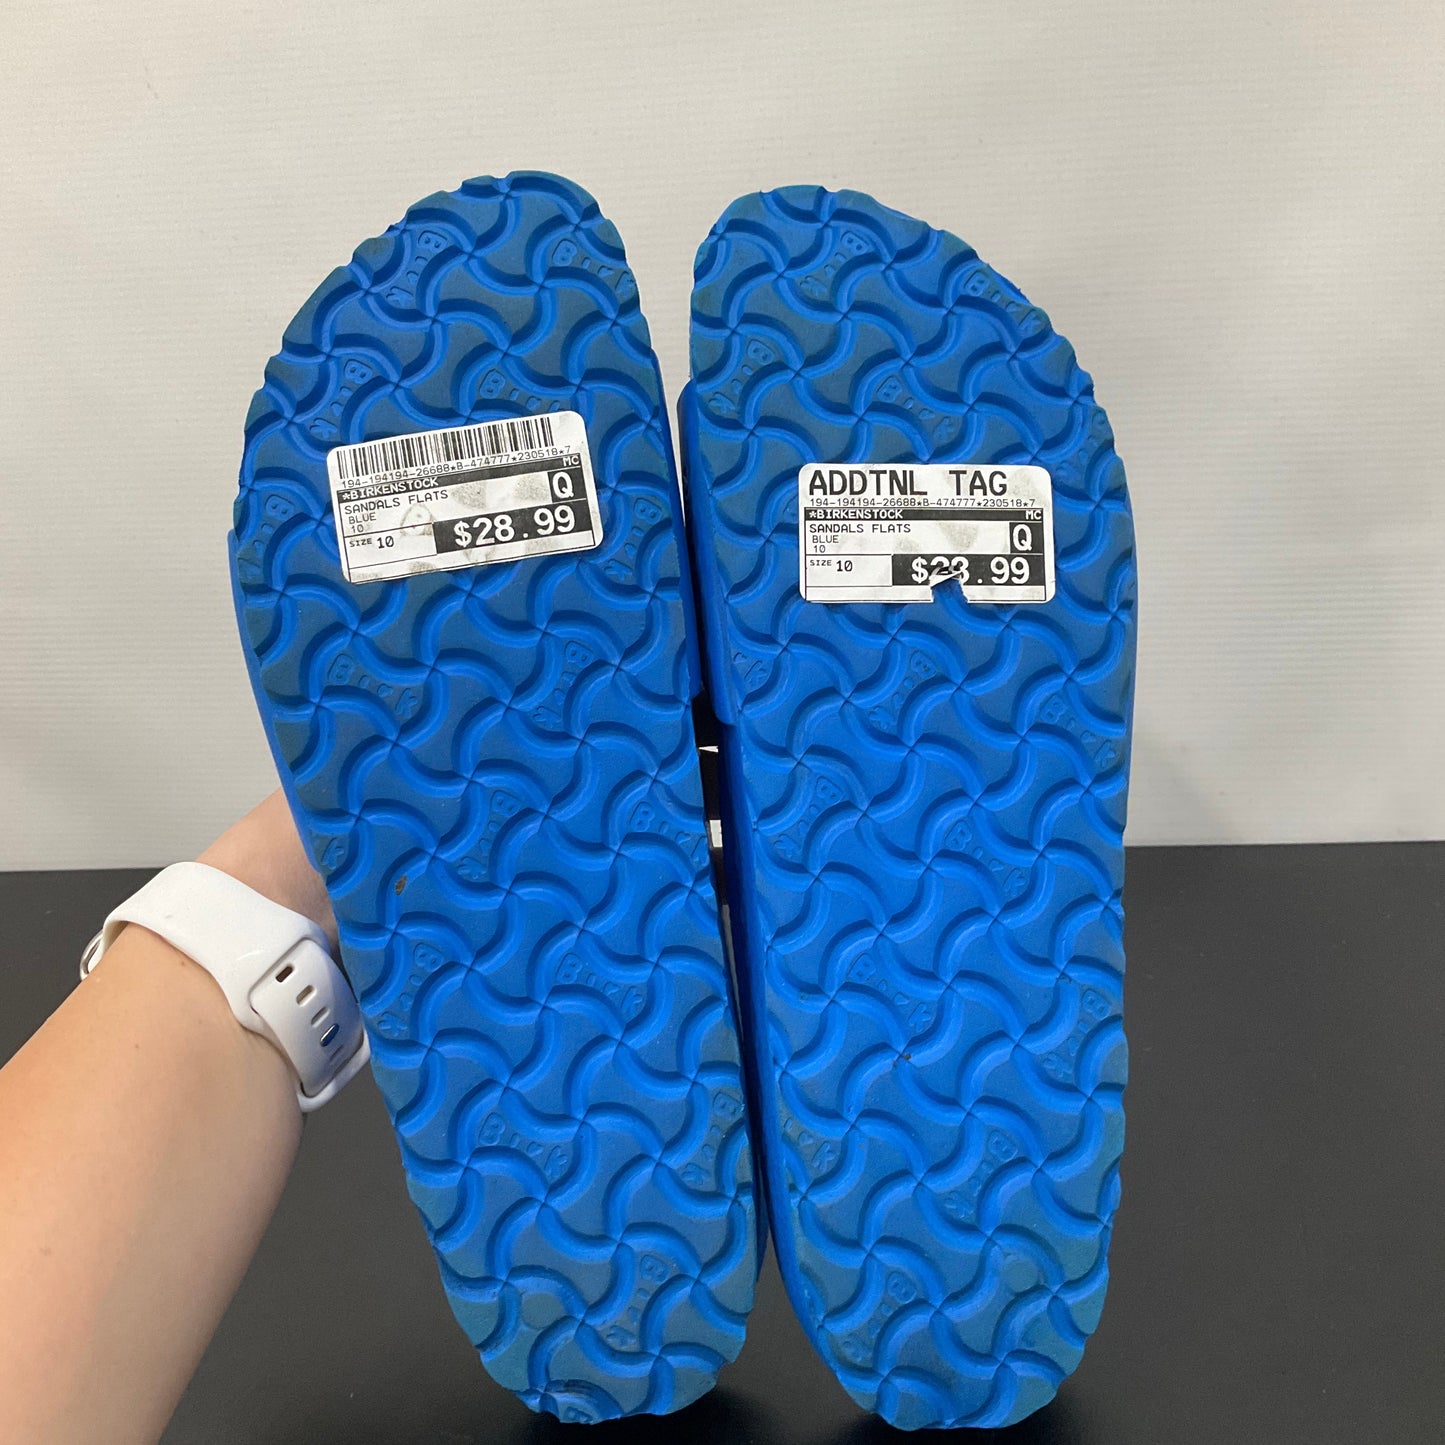 Sandals Flats By Birkenstock  Size: 10